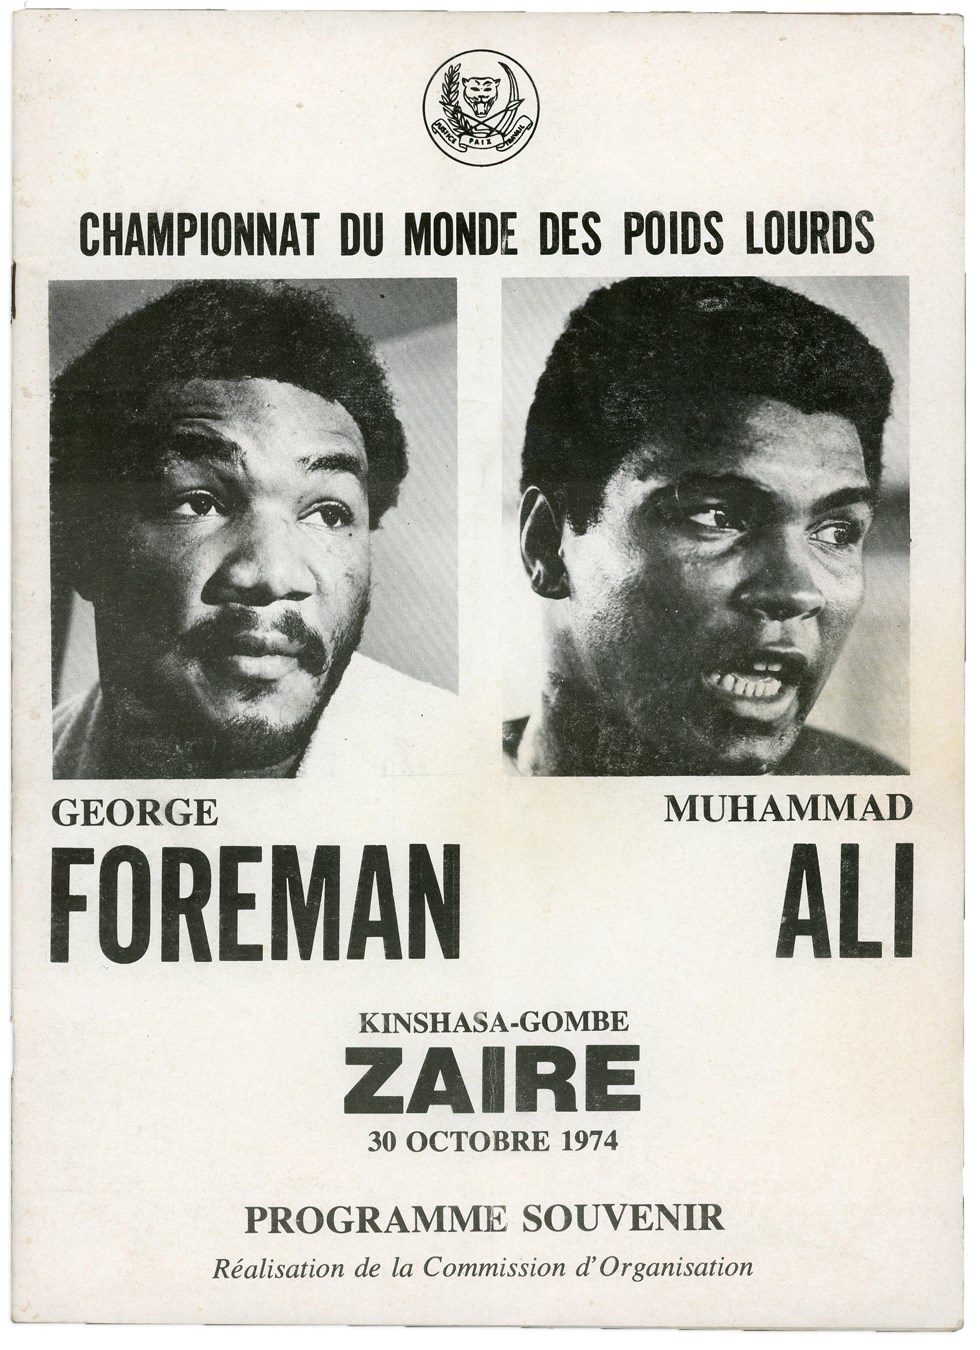 Muhammad Ali & Boxing - 1974 Muhammad Ali vs. George Foreman "Rumble In The Jungle" Zaire Boxing Site Program